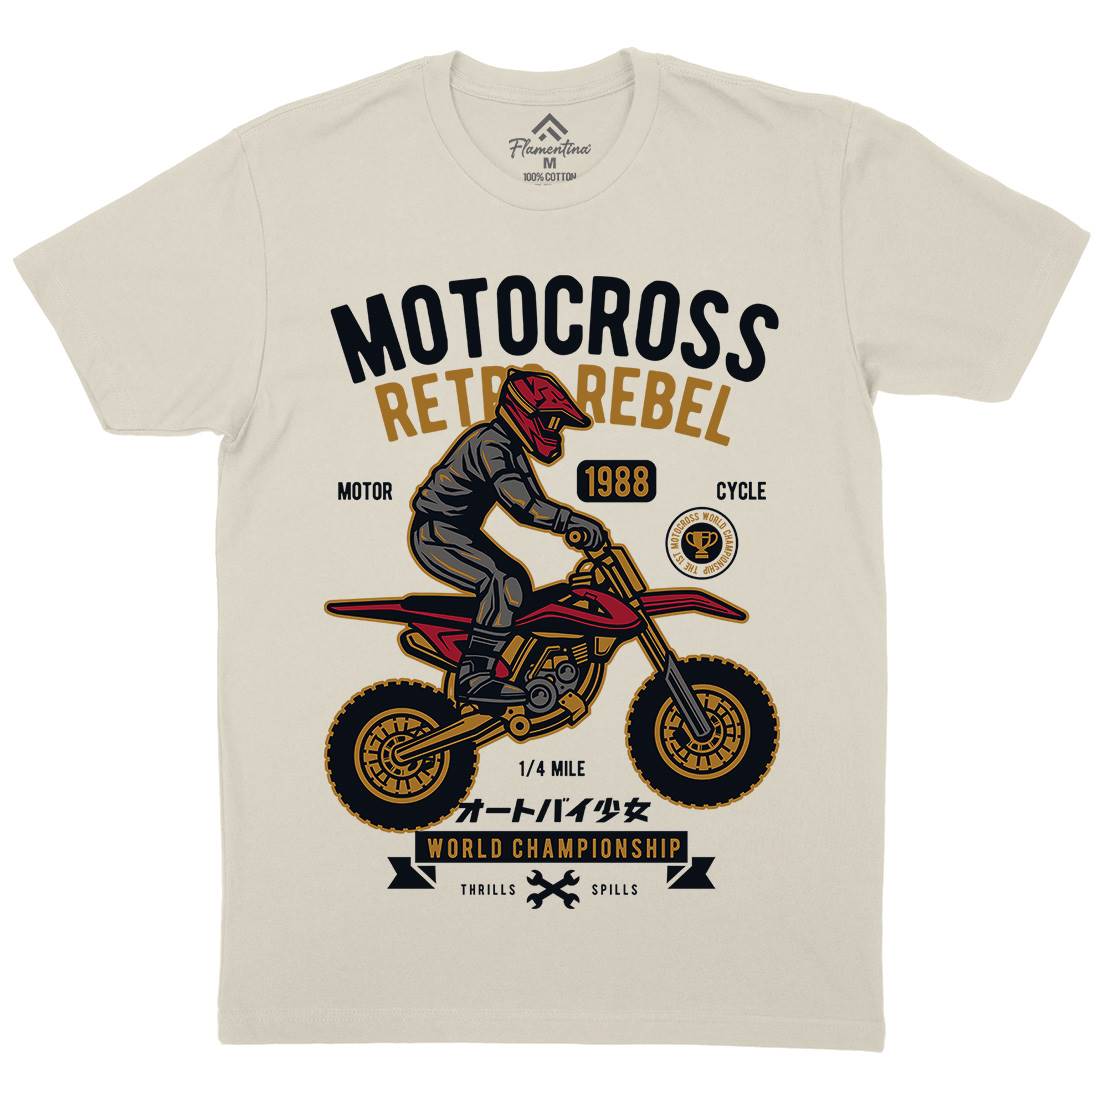 Motocross Retro Rebel Mens Organic Crew Neck T-Shirt Motorcycles D553